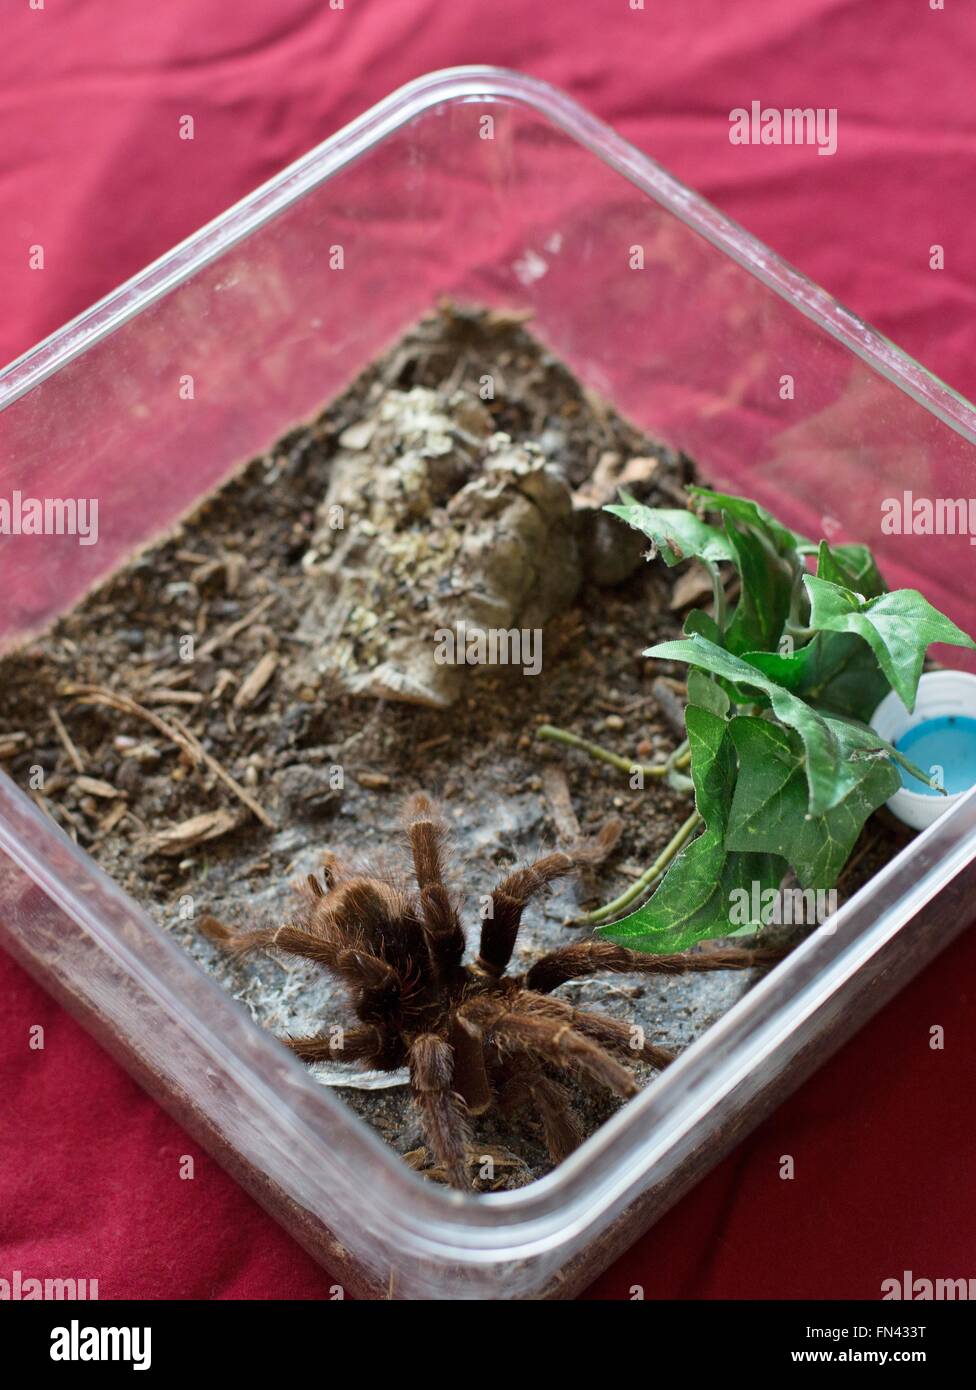 A male tarantula in a plastic container. Stock Photo